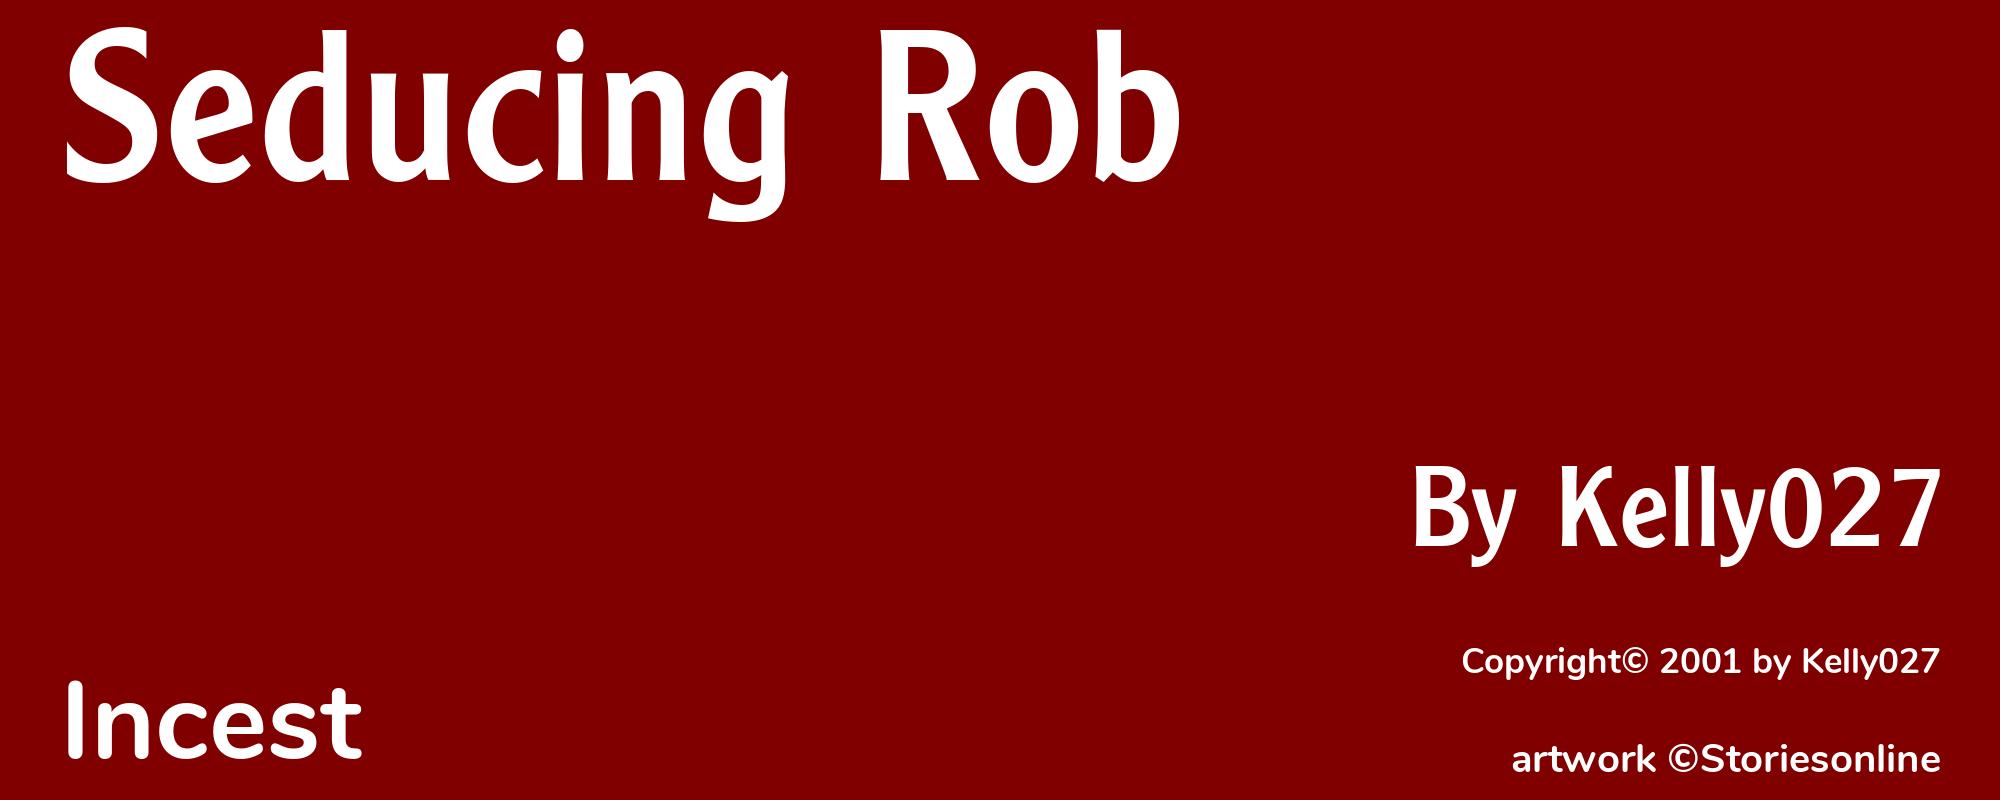 Seducing Rob - Cover